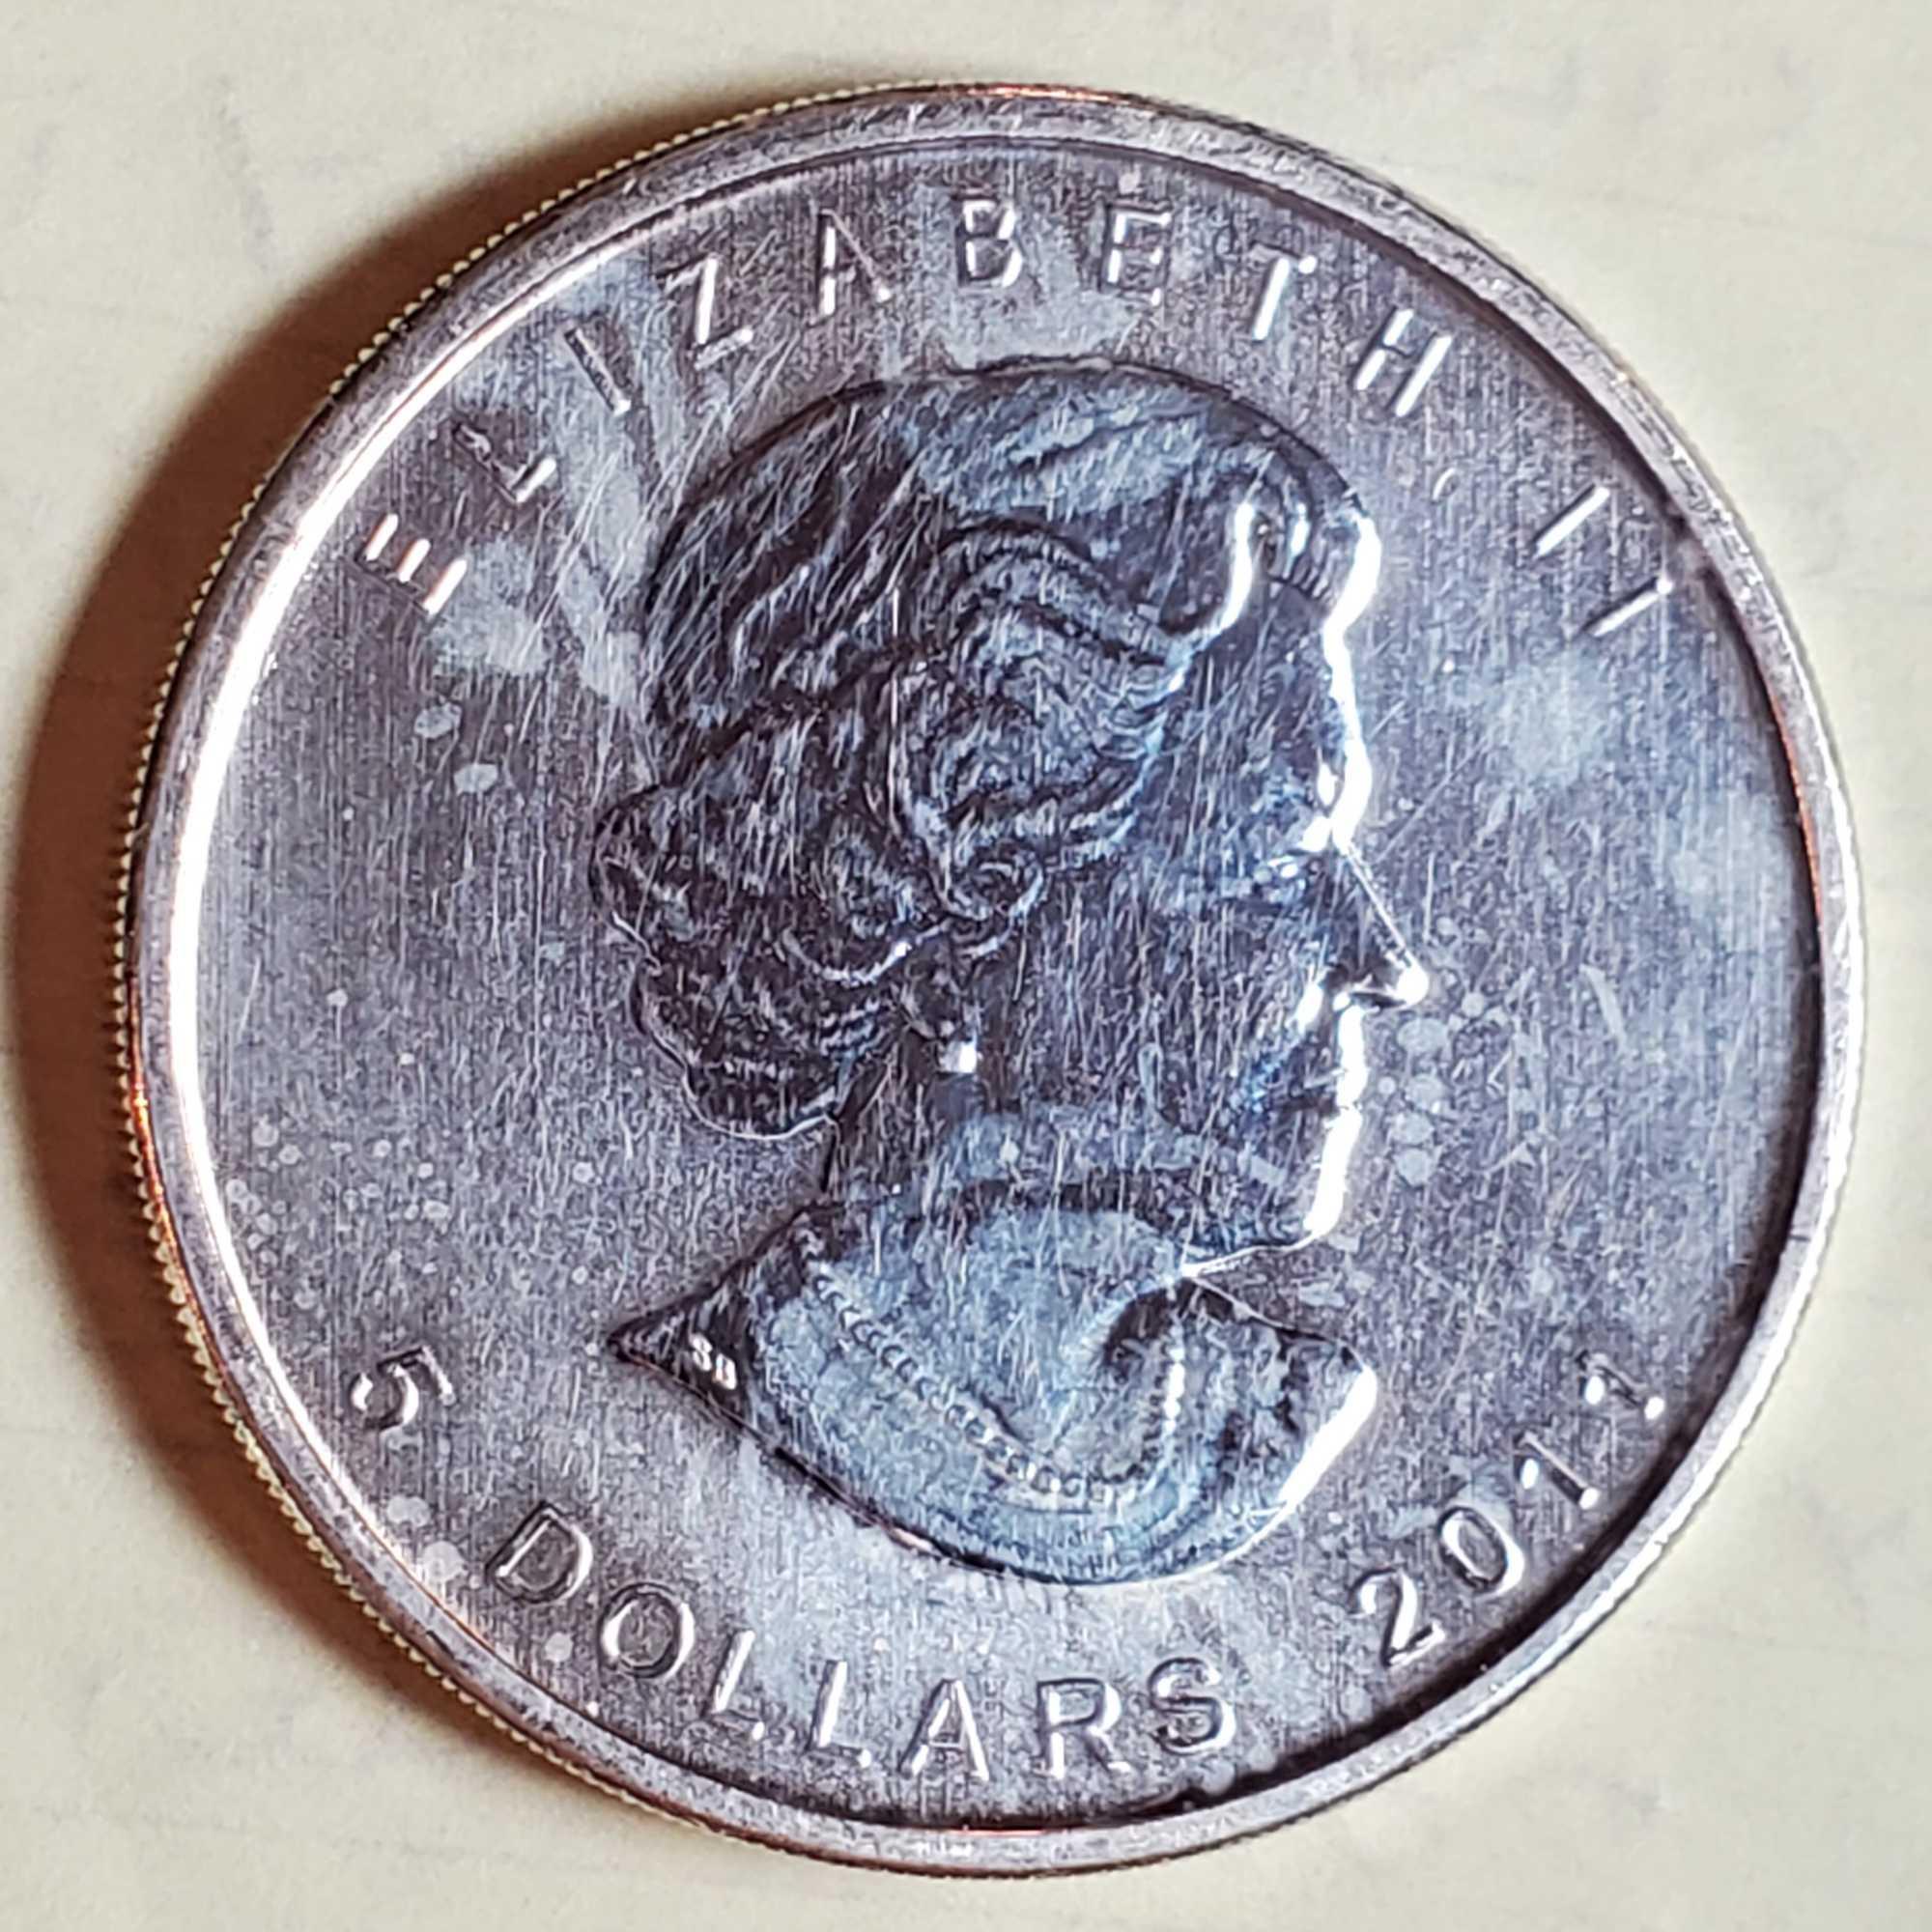 4 1 Oz .999 Silver Bullion Coins - 2015 & 2016 Silver Eagles, 2011 Maple Leaf and 2023 Libertad